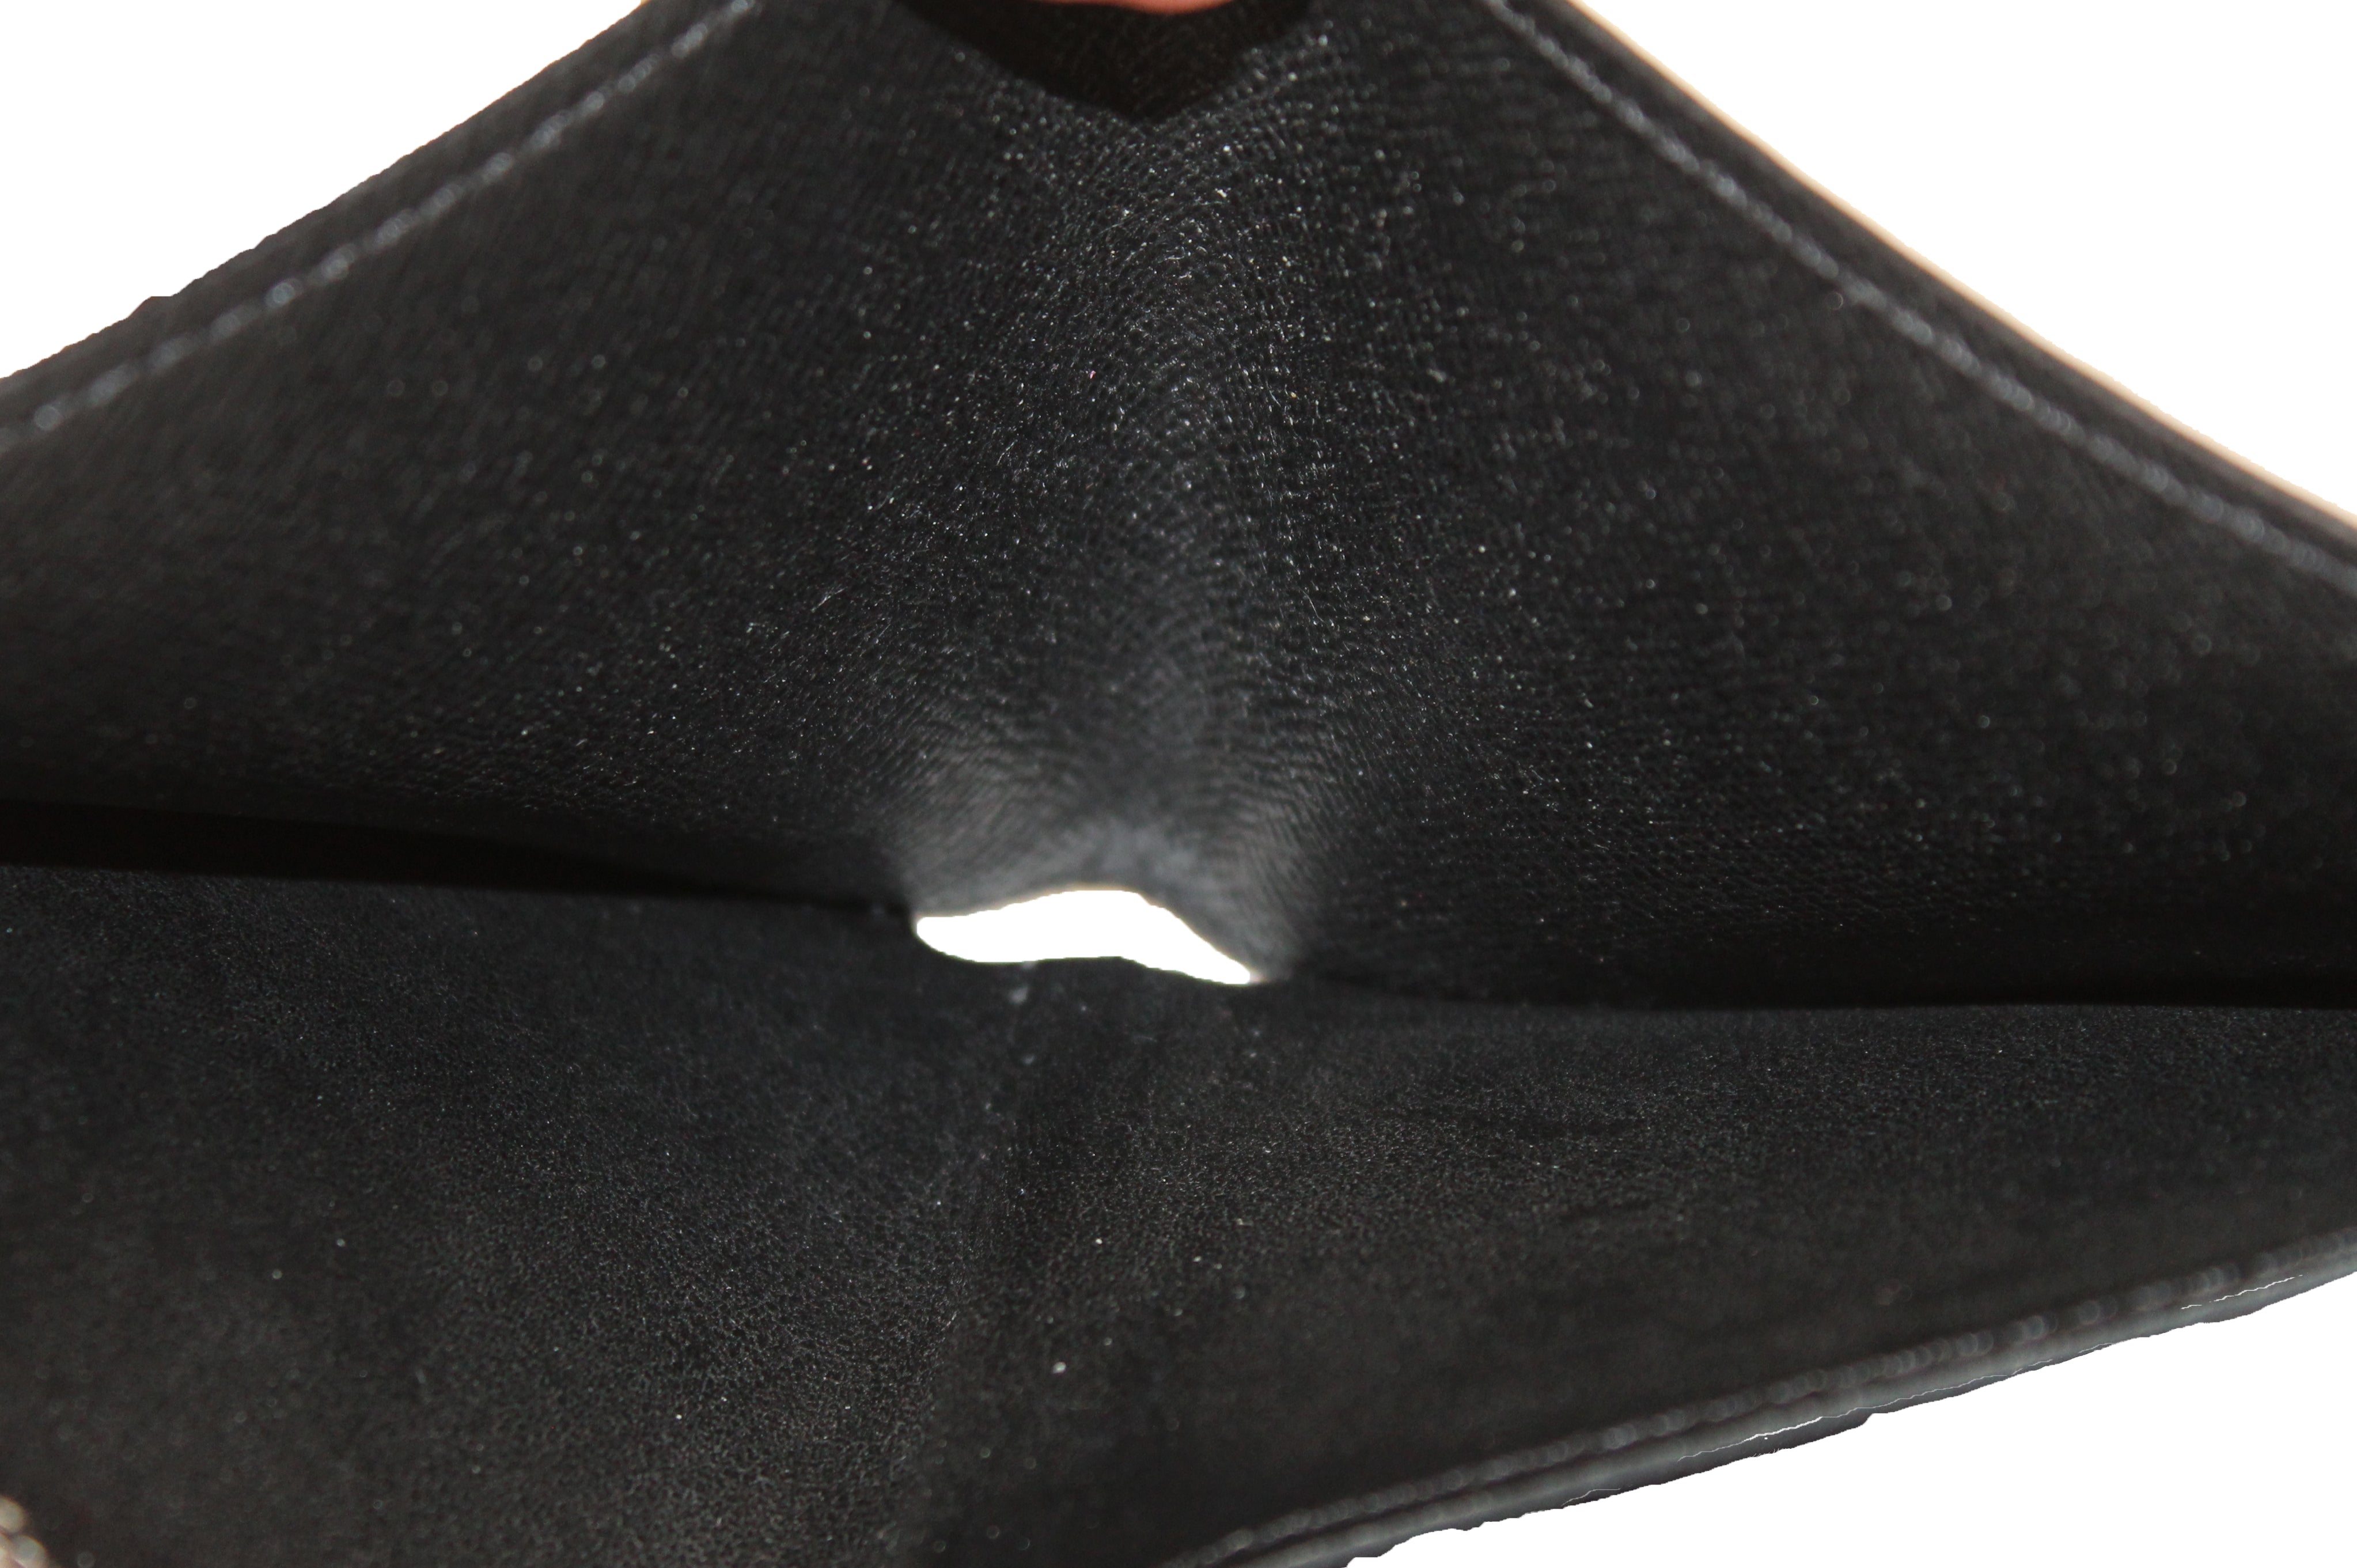 Slender Wallet Damier Graphite Canvas - Men - Small Leather Goods